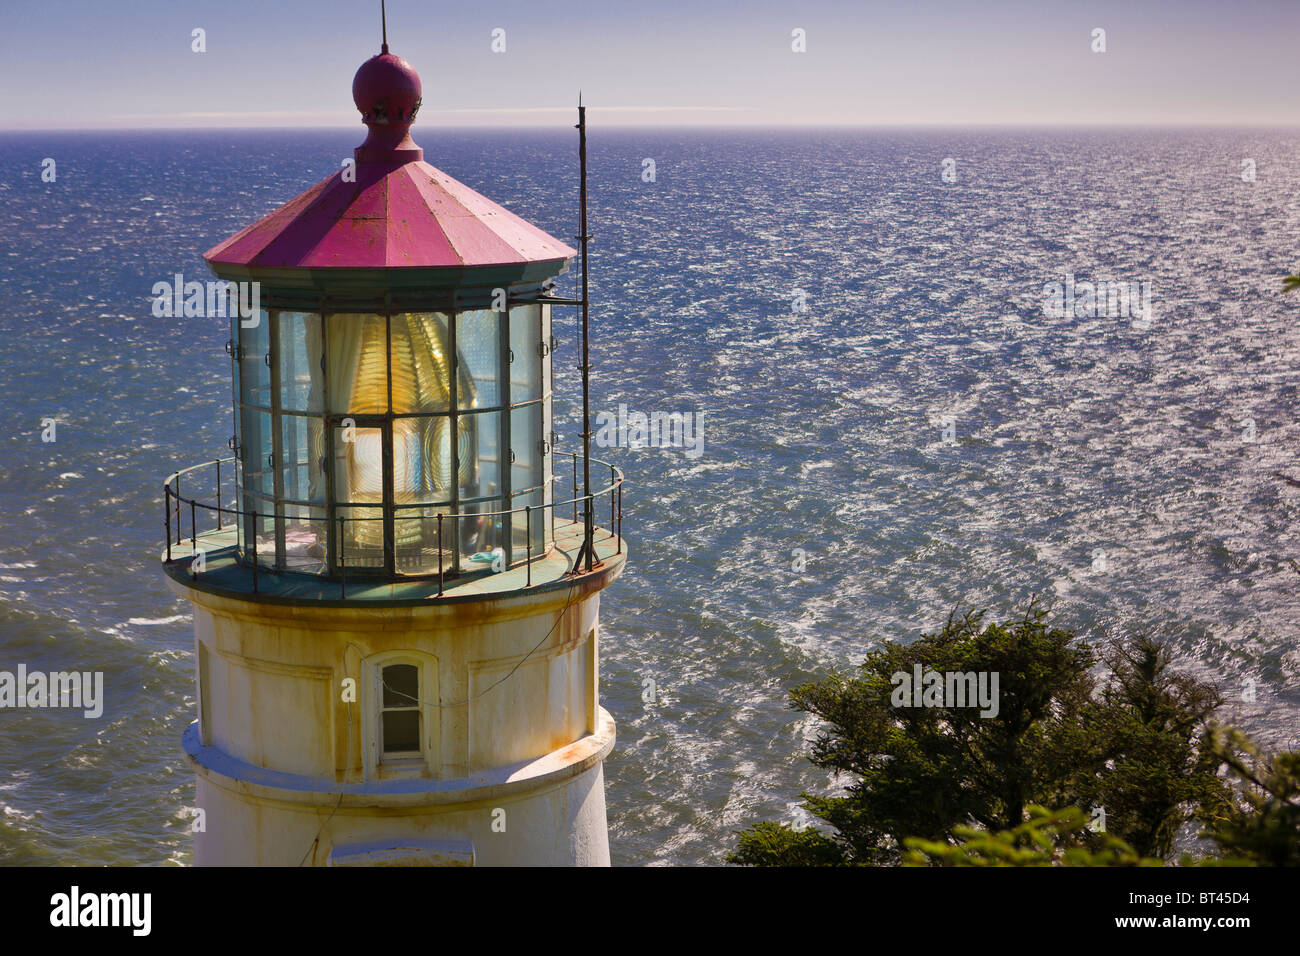 HECETA HEAD, OREGON, USA - Heceta Head lighthouse on central Oregon coast overlooking Pacific Ocean. Stock Photo